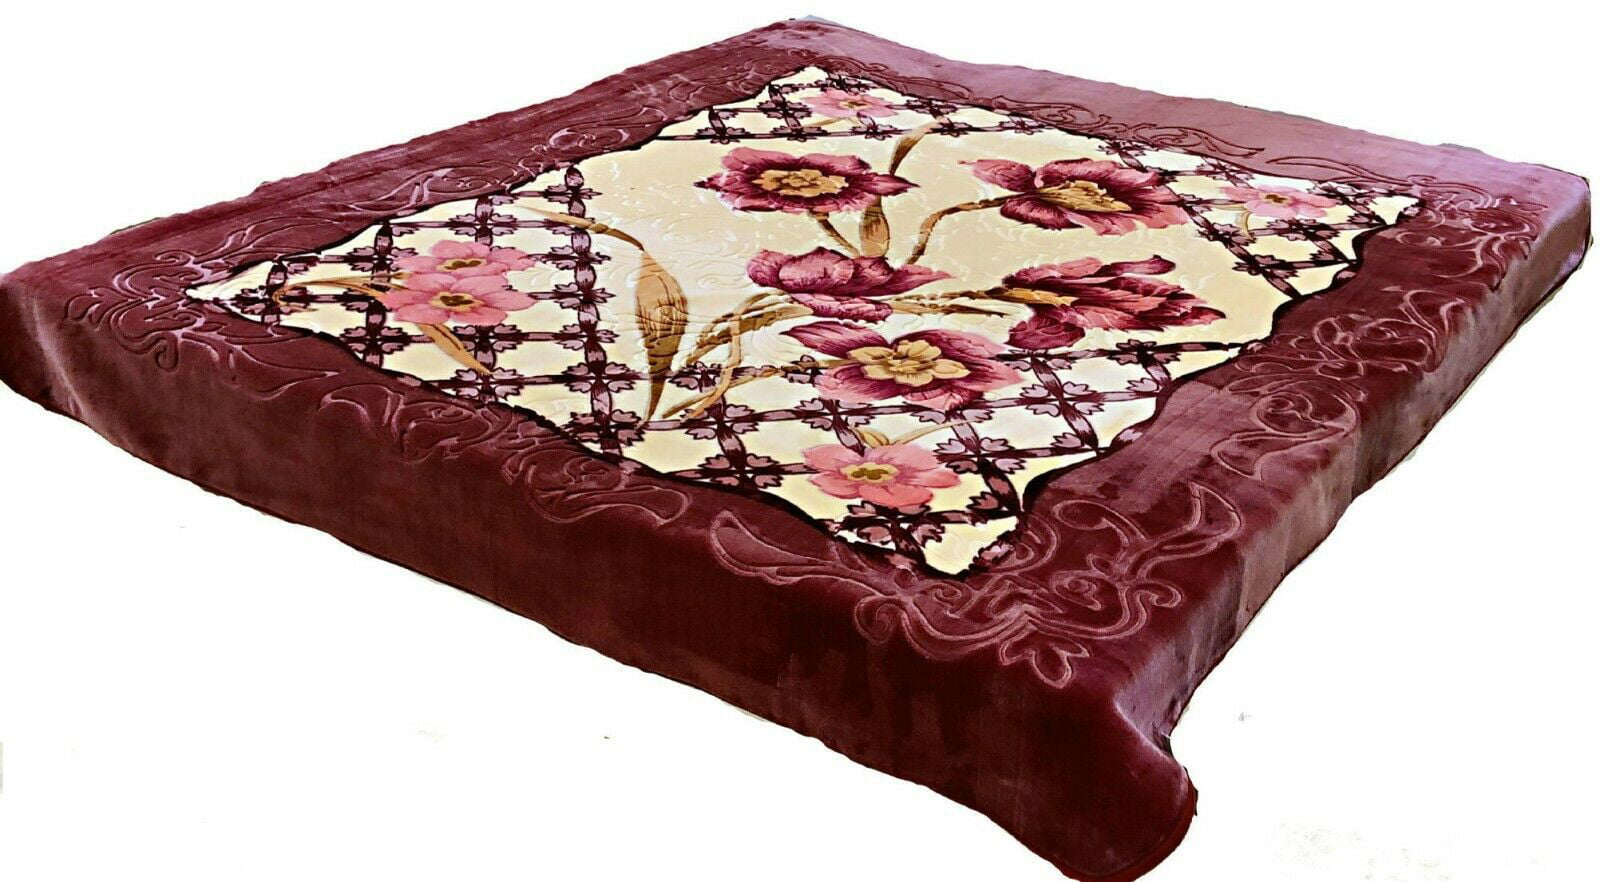 Weighted Heavy Korea Plush Mink Blanket, Queen Multicolor Flower Print